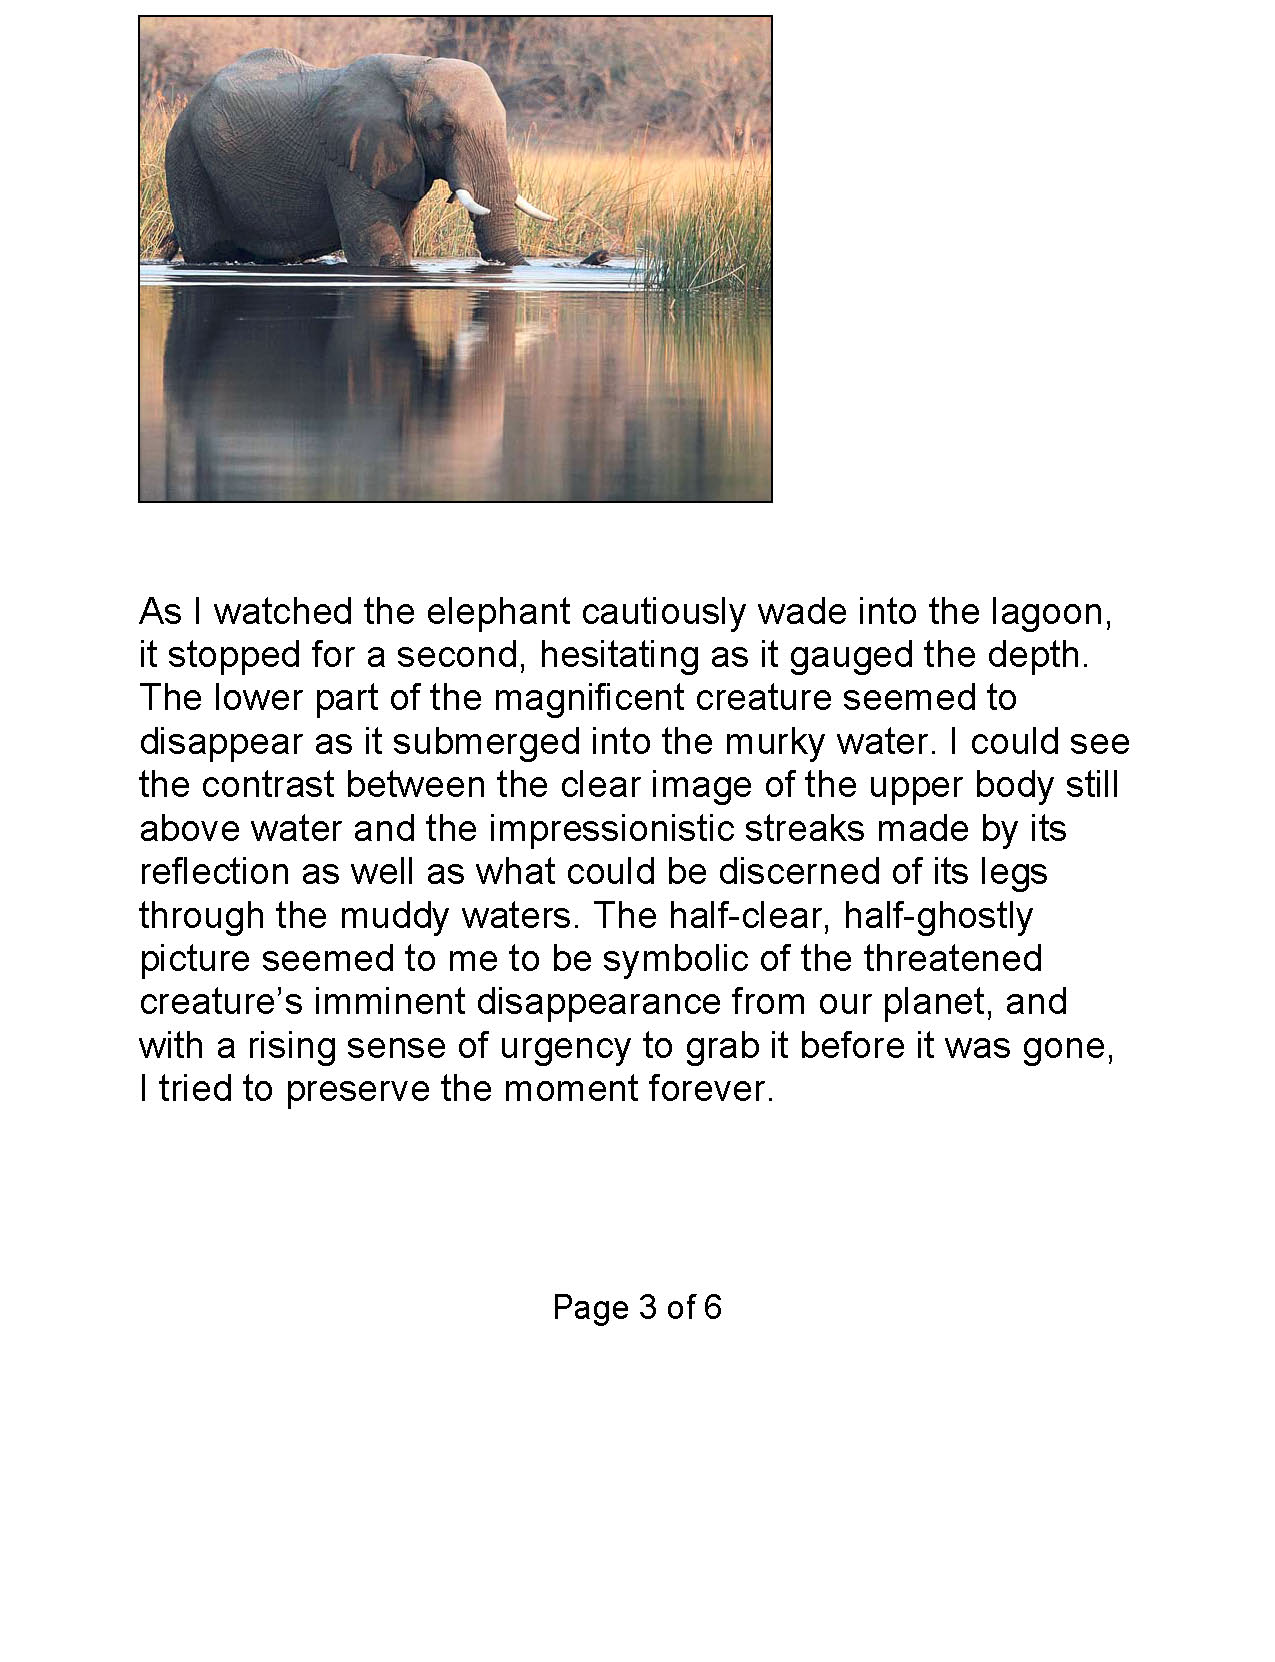 Elephant photo essay web 2_Page_3